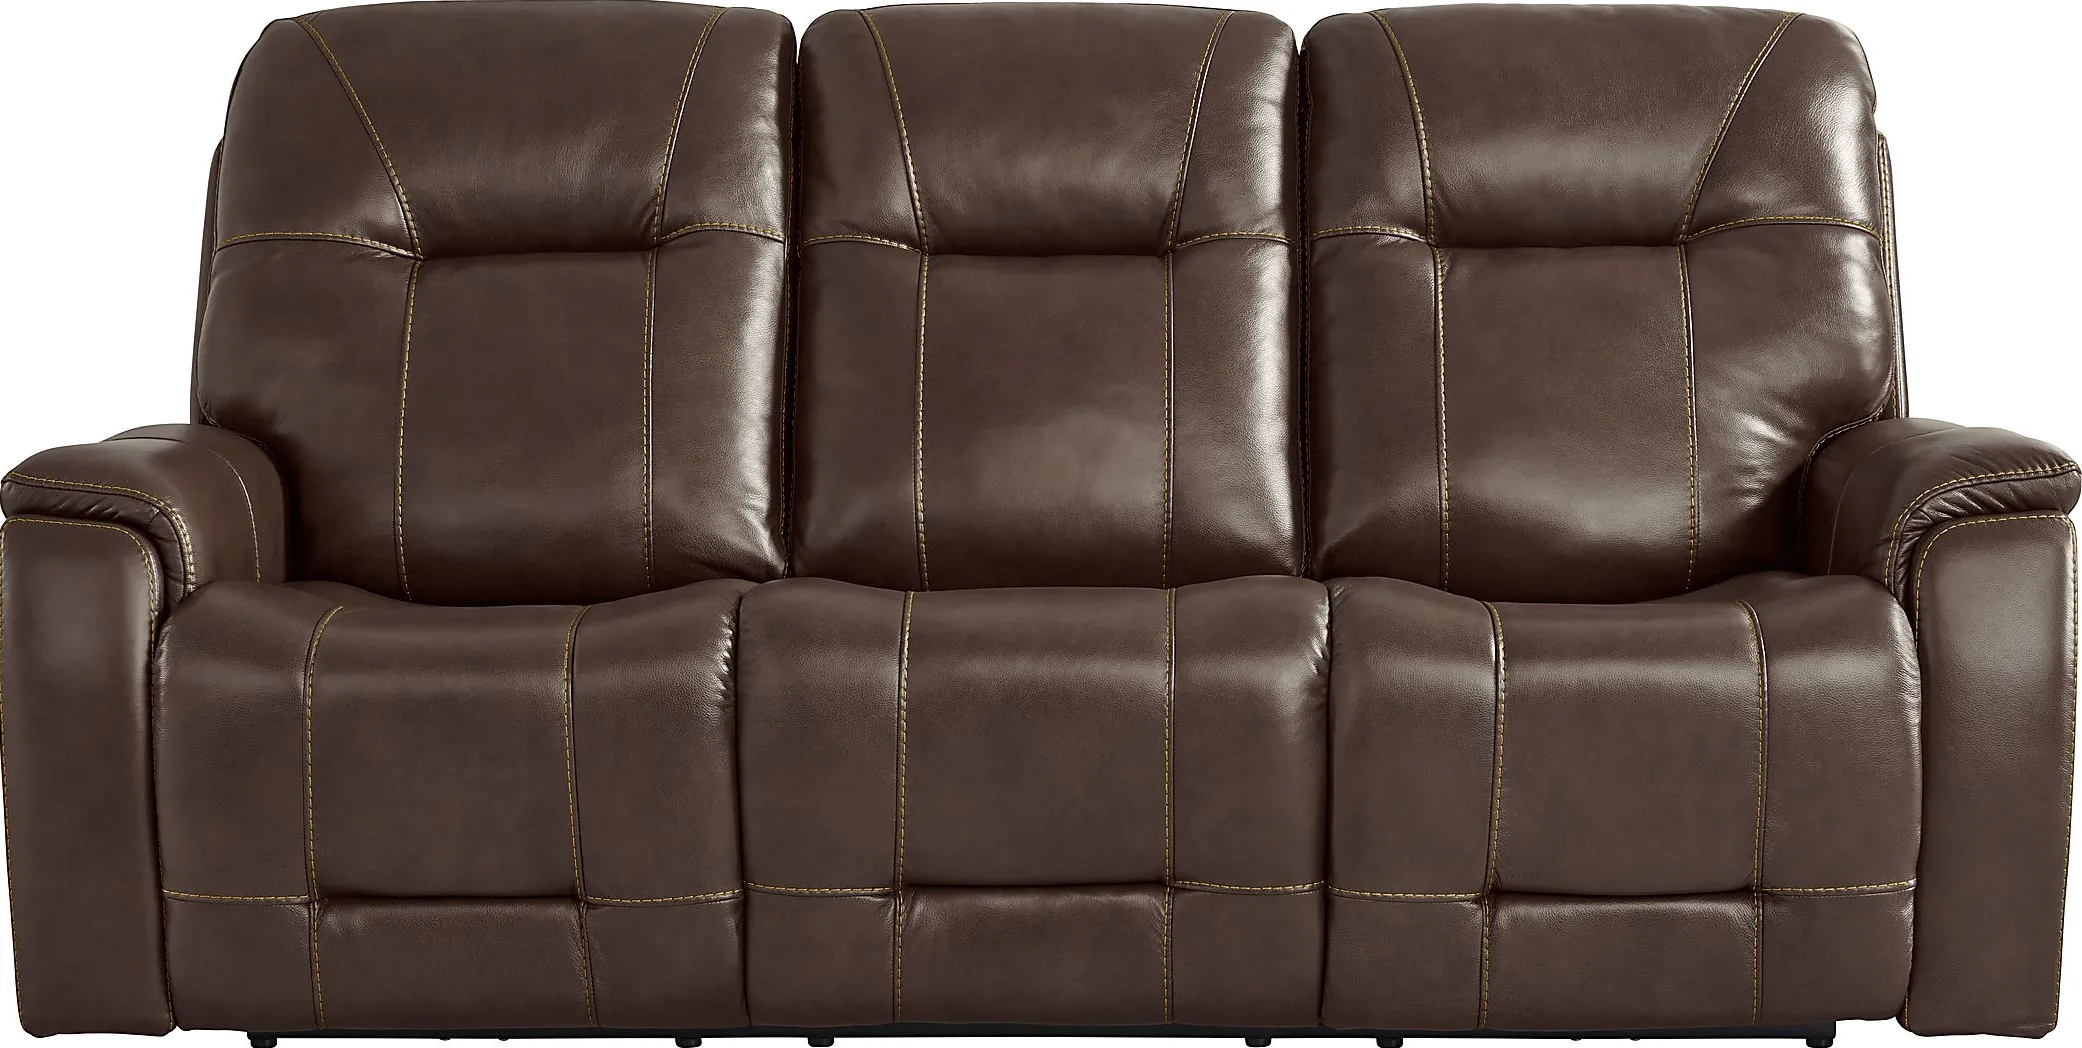 Matthews Cove Brown Leather Triple Power Reclining Sofa